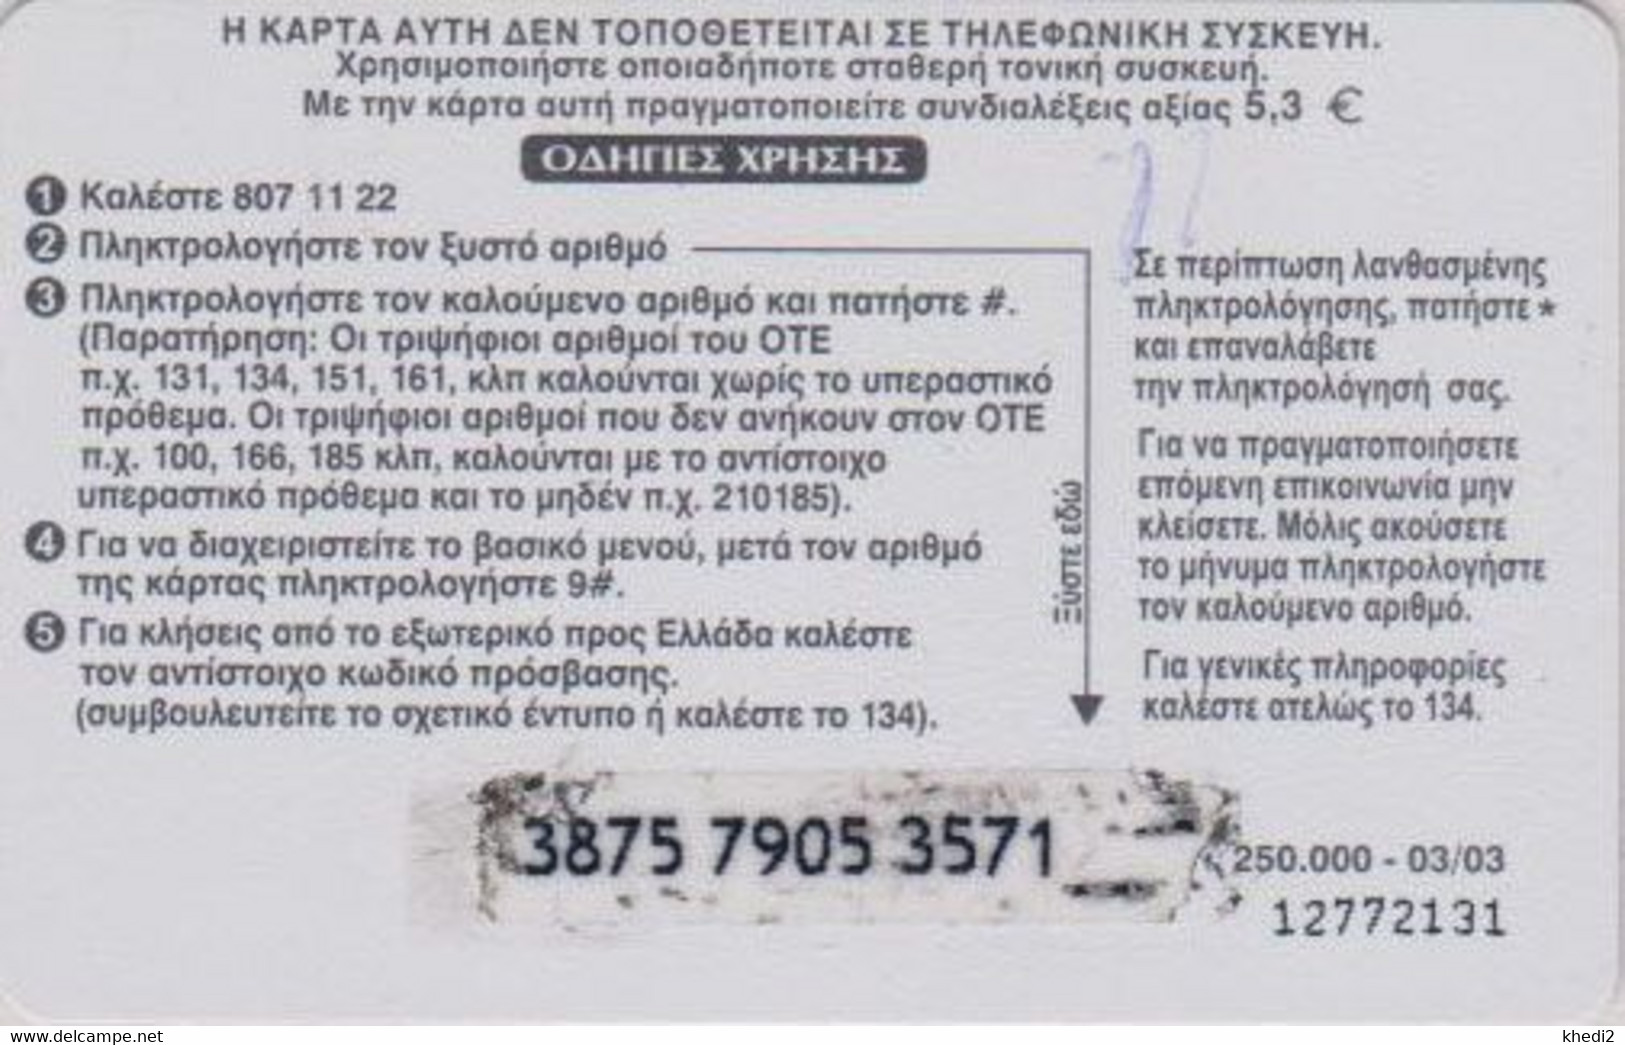 Télécarte GRECE - ANIMAL - COCCINELLE - LADYBIRD GREECE Phonecard - MARIENKÄFER - 37 - Ladybugs